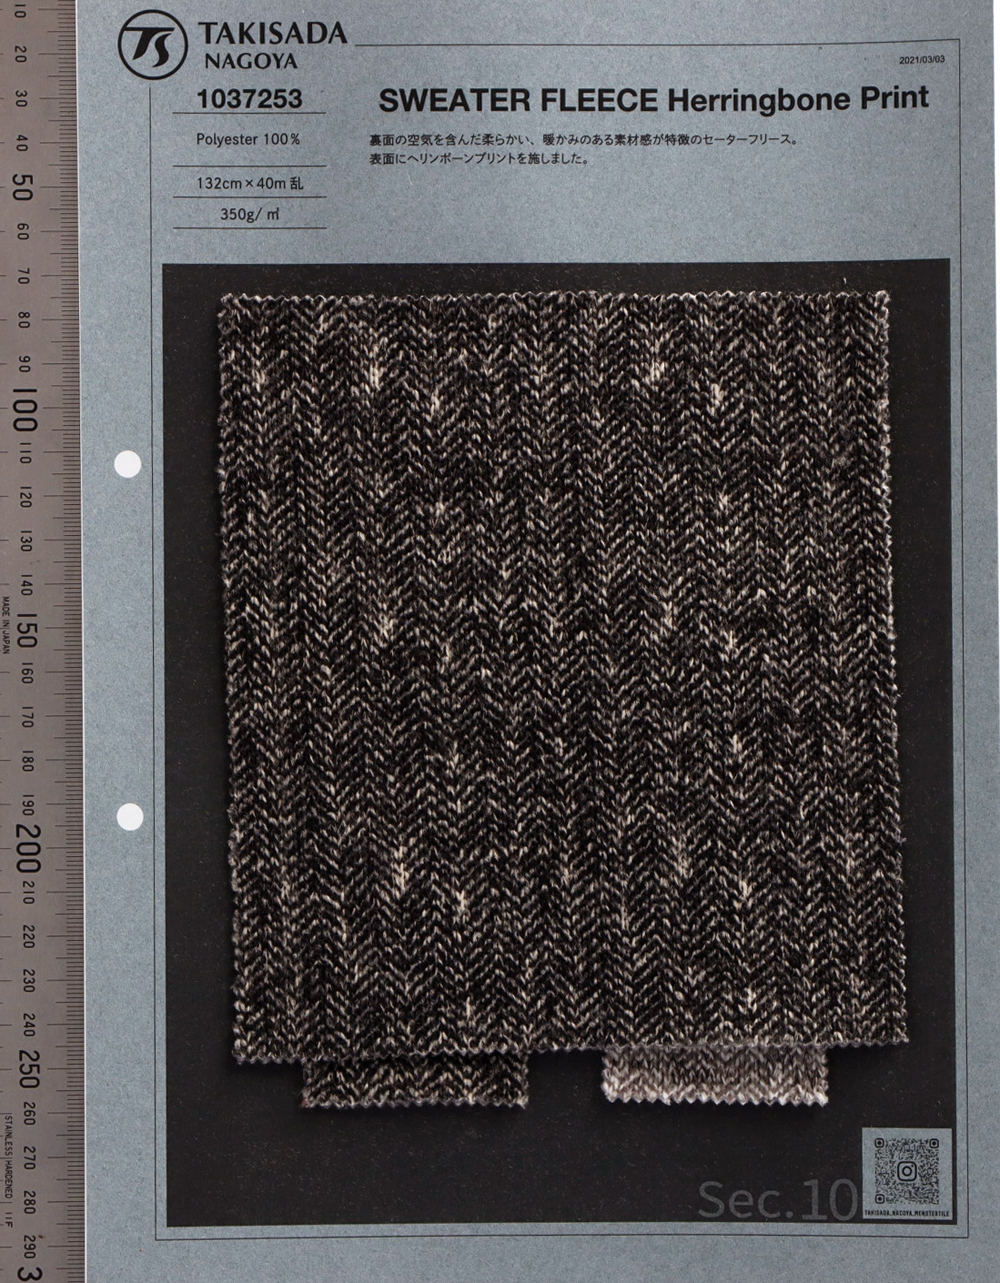 1037253 Sweater Fleece Herringbone Print[Textile / Fabric] Takisada Nagoya